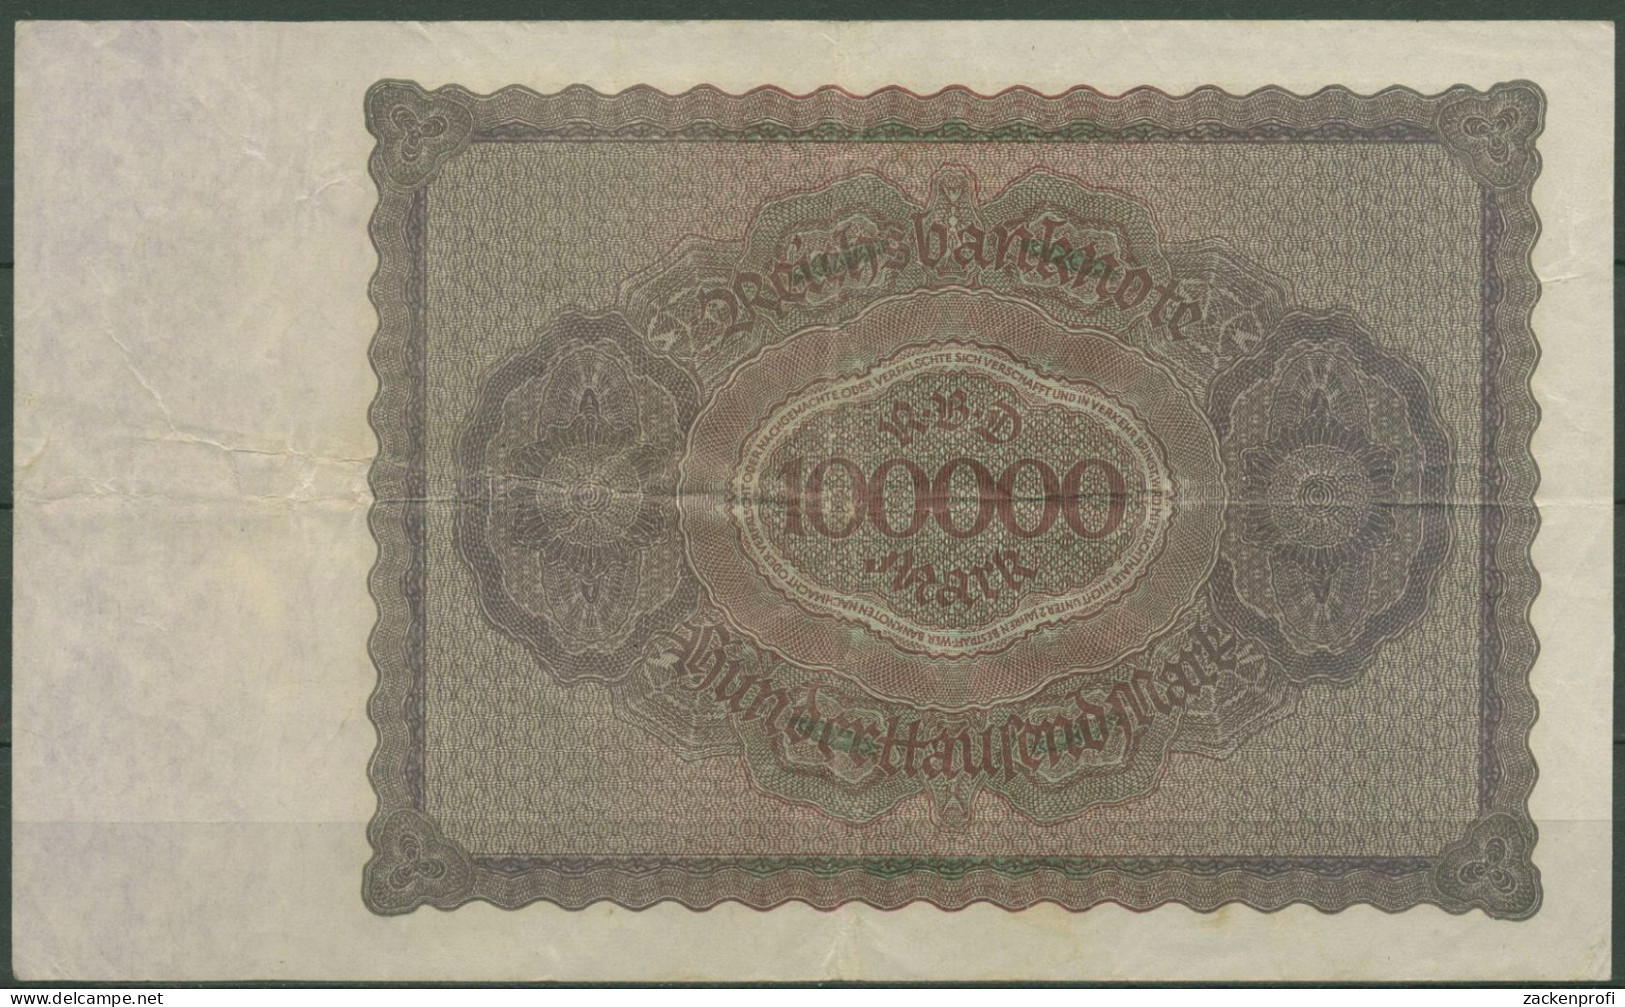 Dt. Reich 100000 Mark 1923, DEU-93a Serie F, Gebraucht (K1387) - 100000 Mark